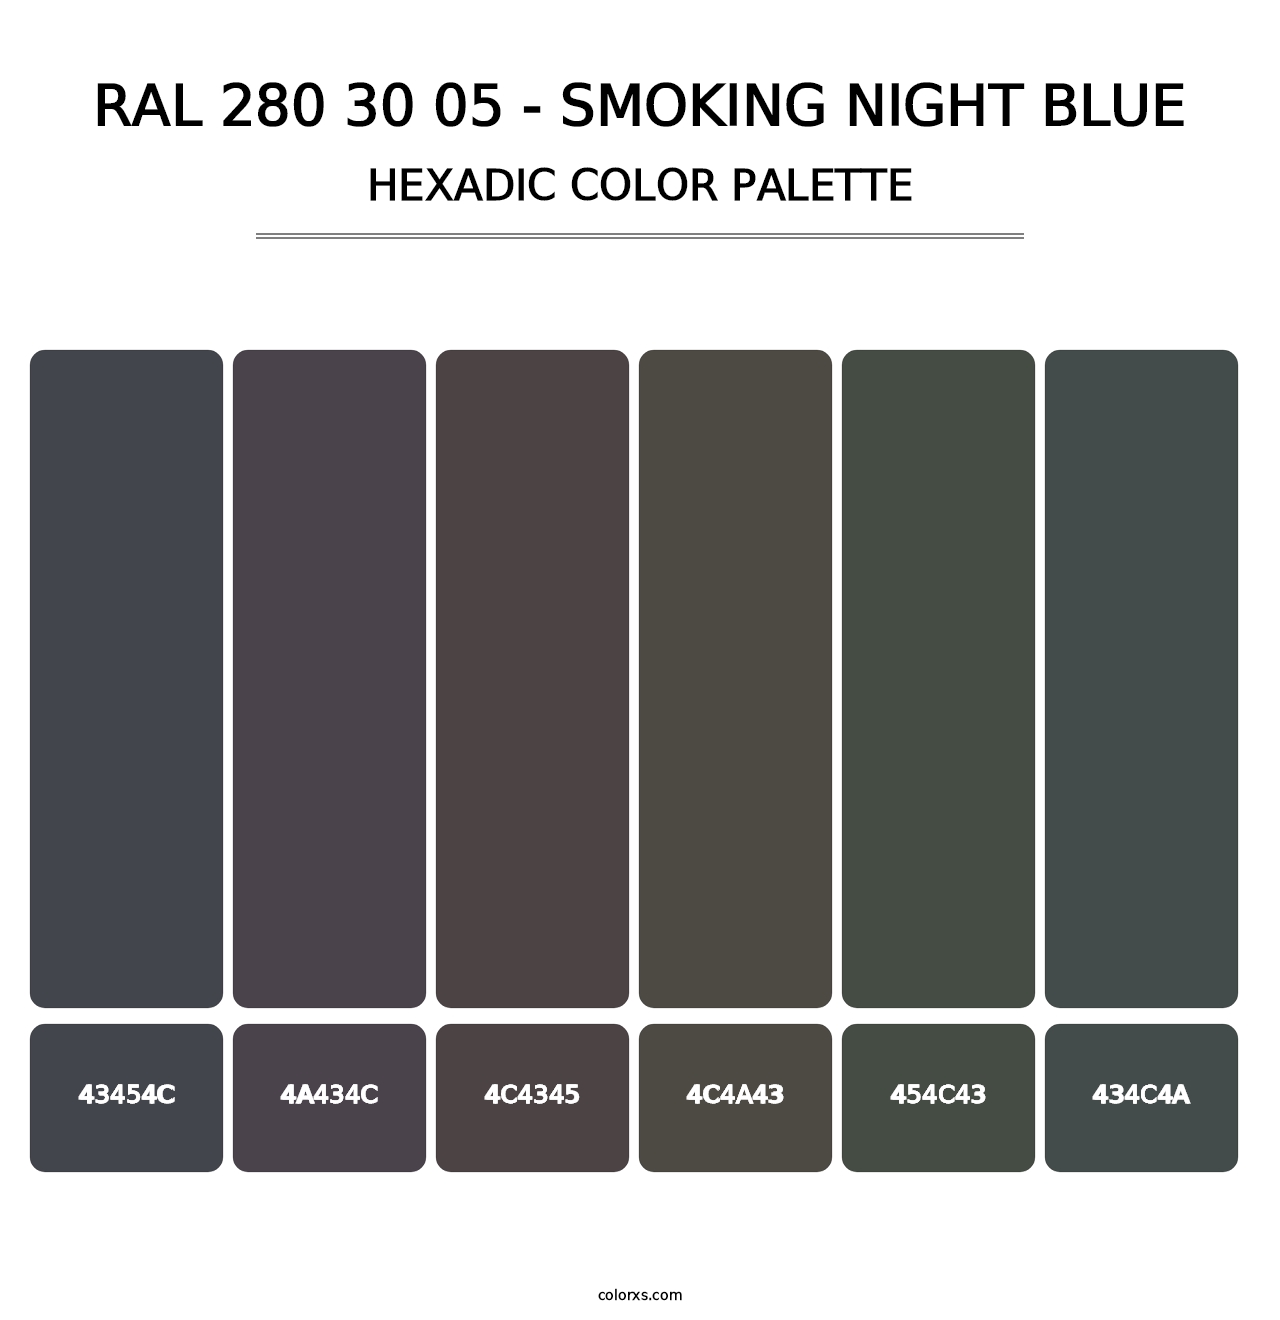 RAL 280 30 05 - Smoking Night Blue - Hexadic Color Palette